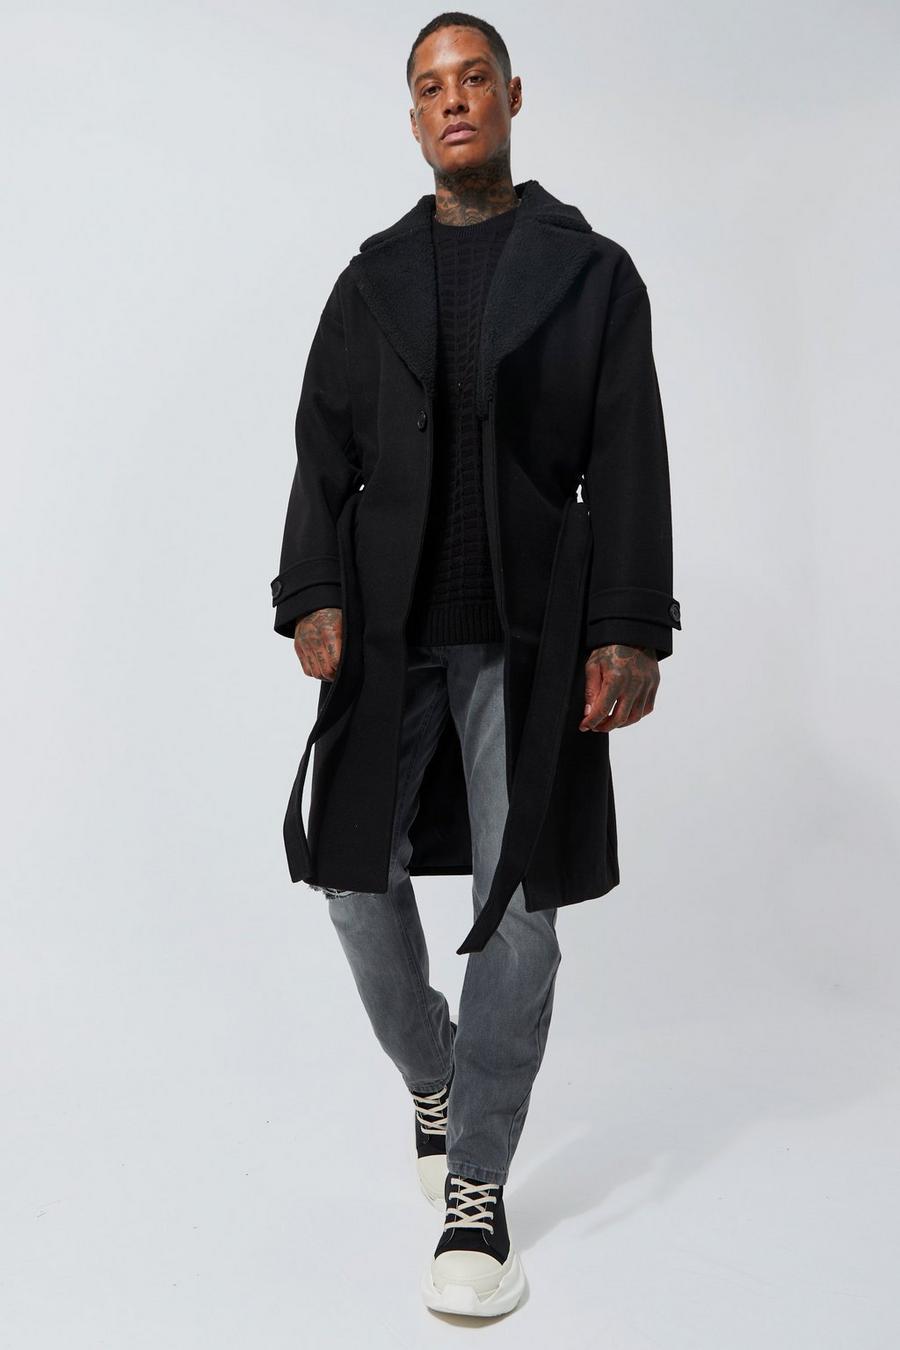 Black Wool Look Overcoat With Borg Collar